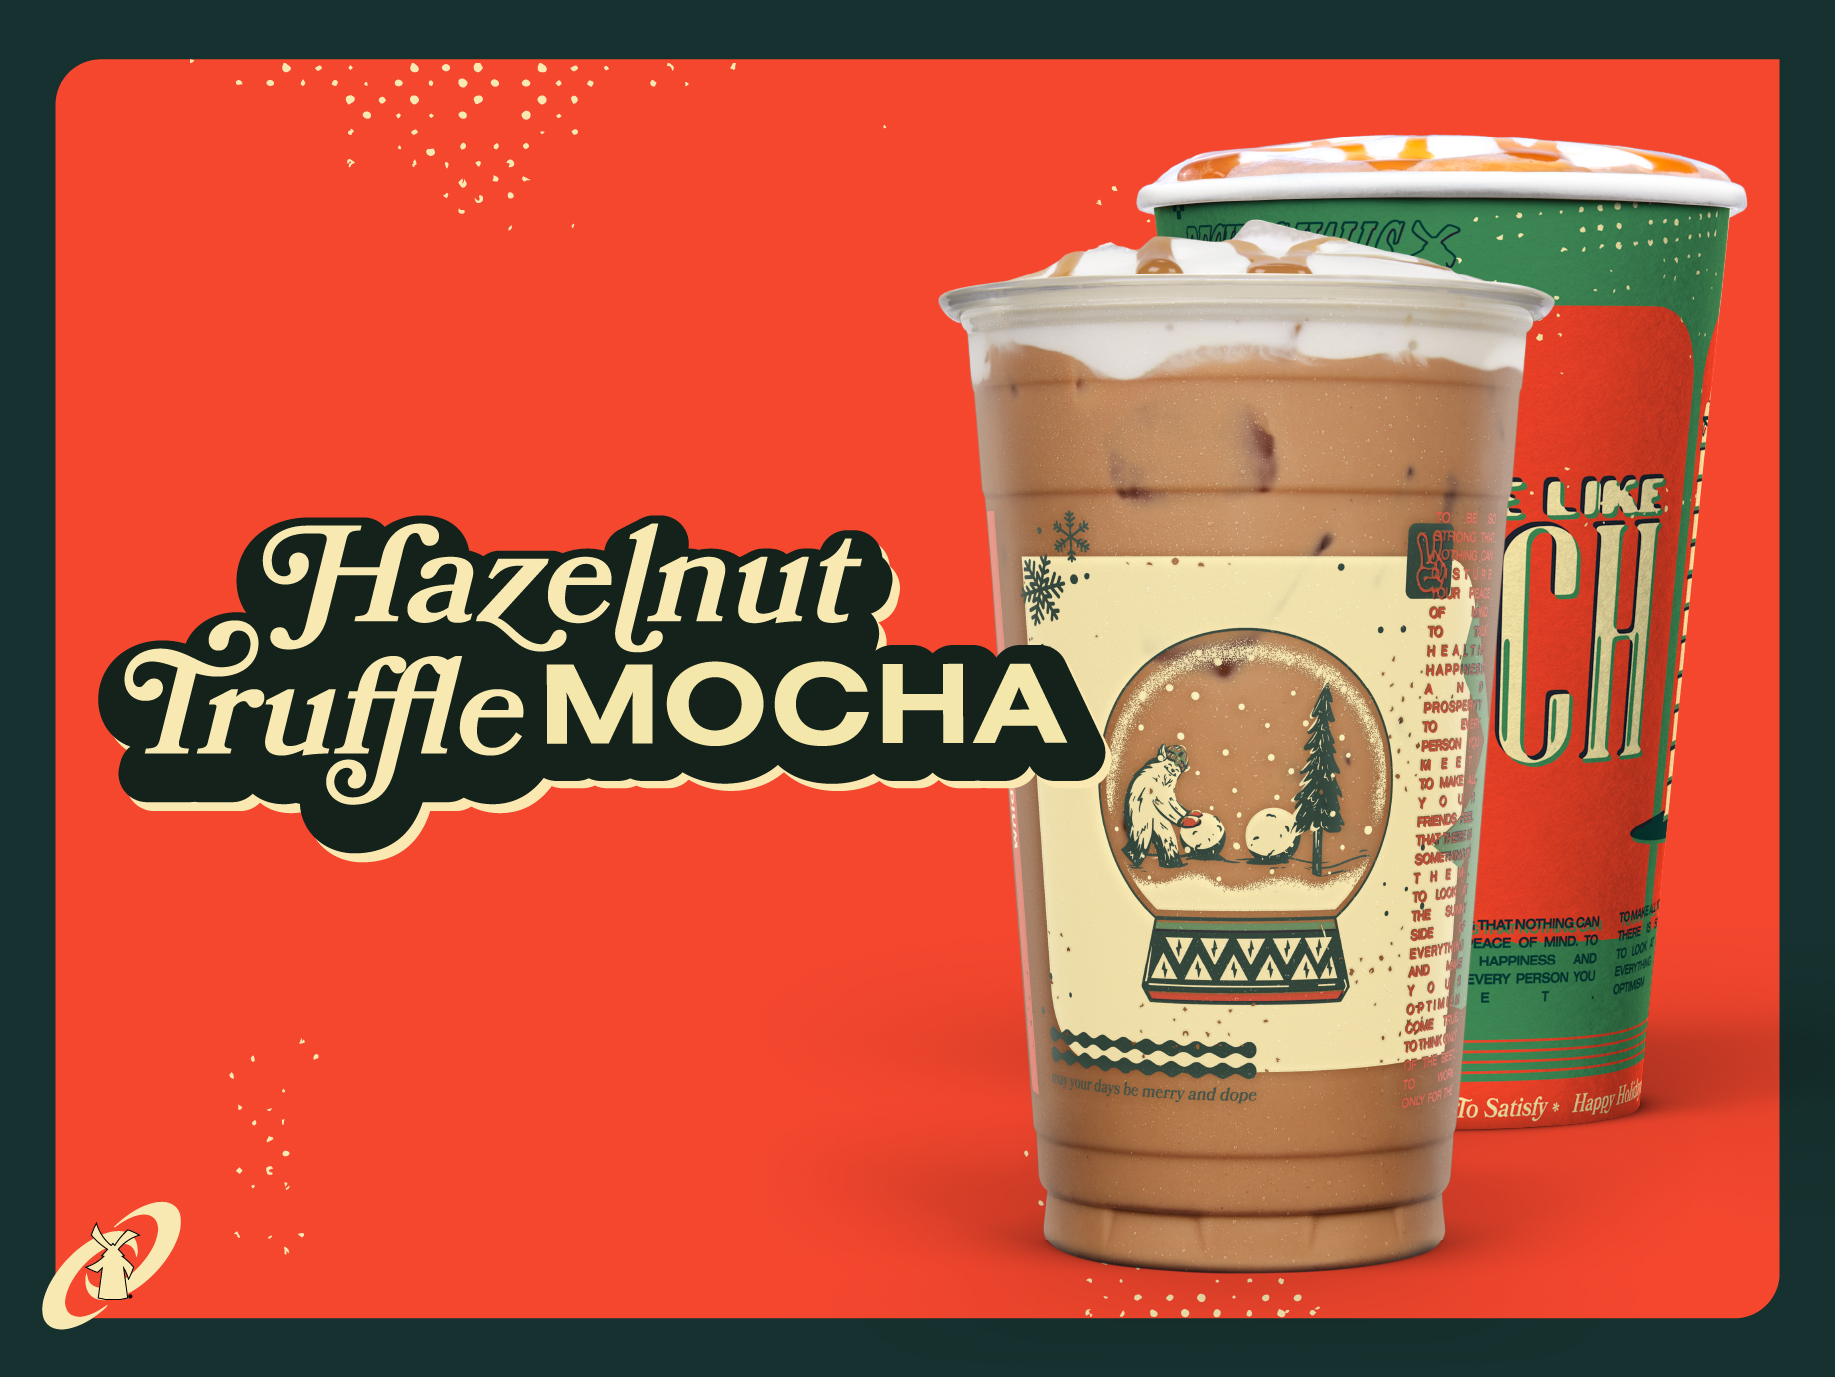 Hazelnut Truffle Mocha: The Hazelnut Truffle Mocha features Dutch Bros’ signature chocolate milk, espresso, and hazelnut flavor, topped with Soft Top and caramel drizzle.